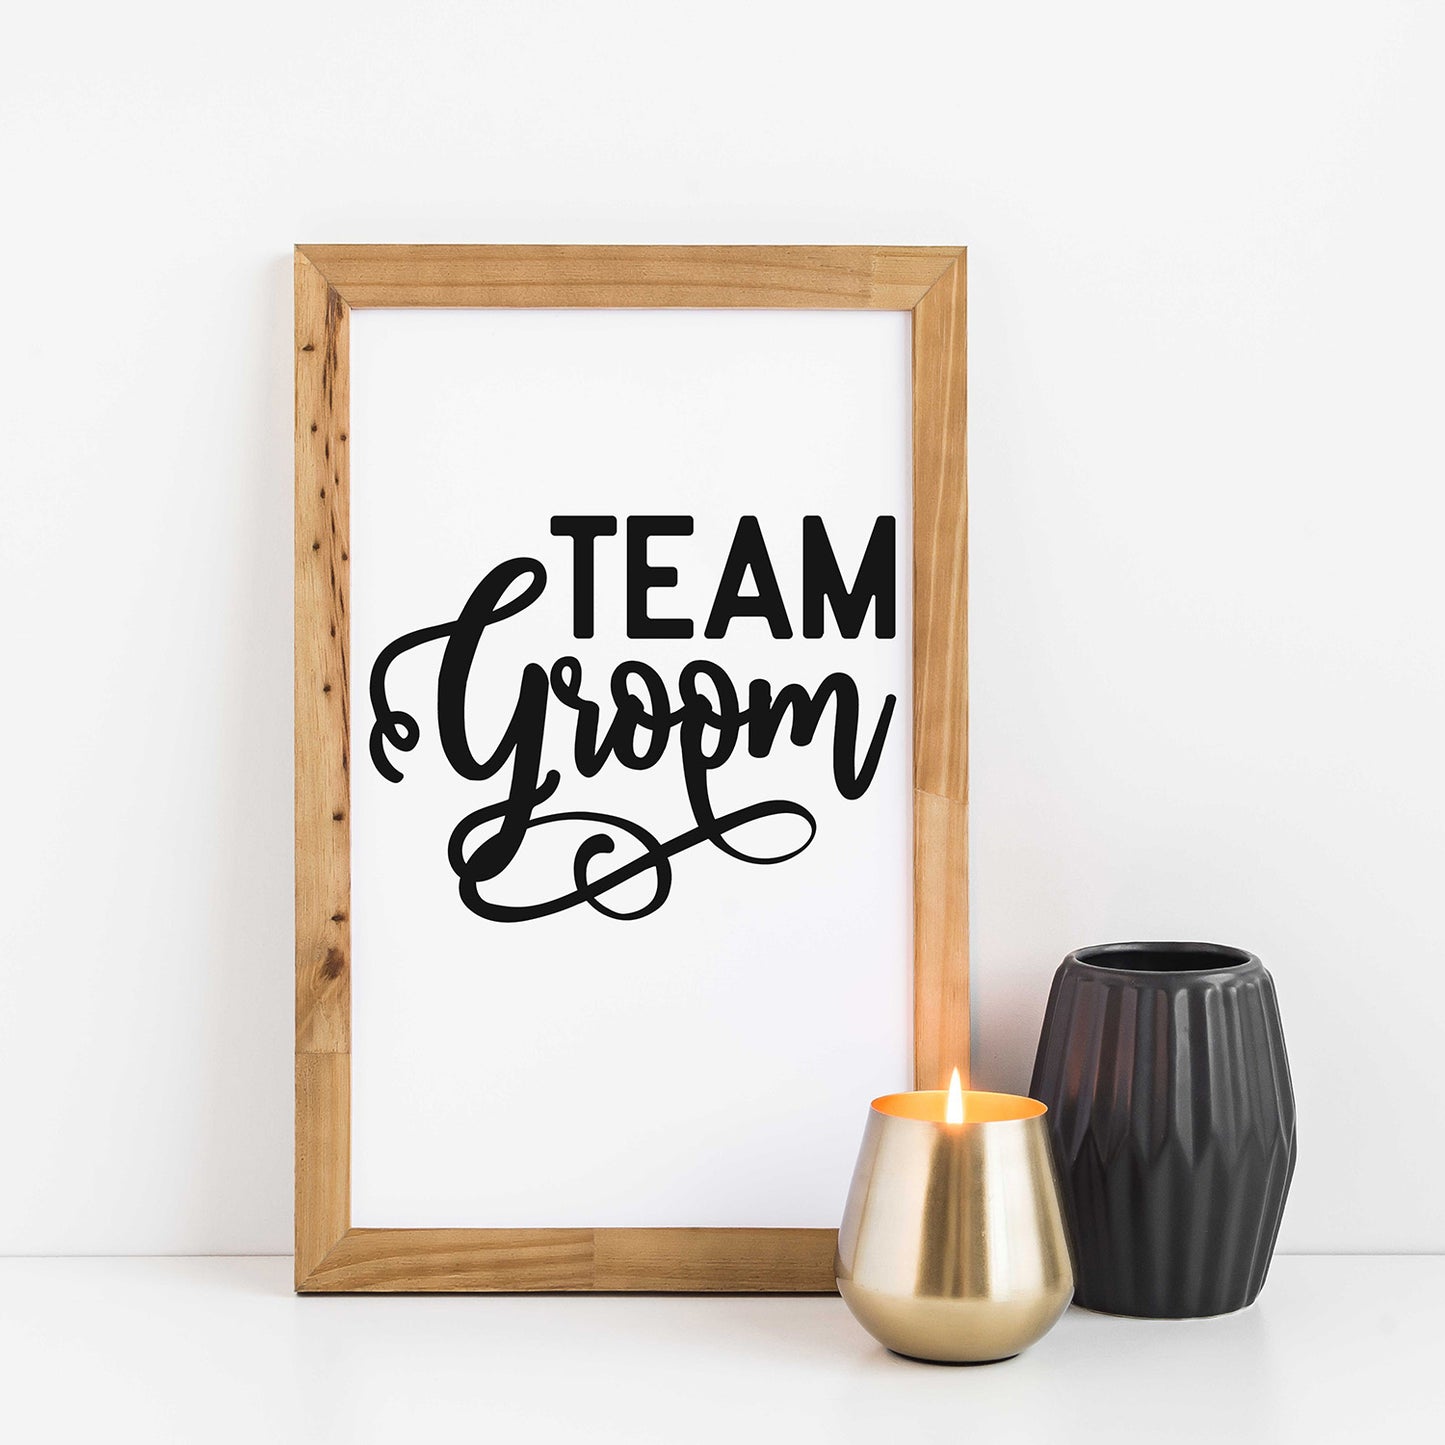 "Team Groom" Graphic